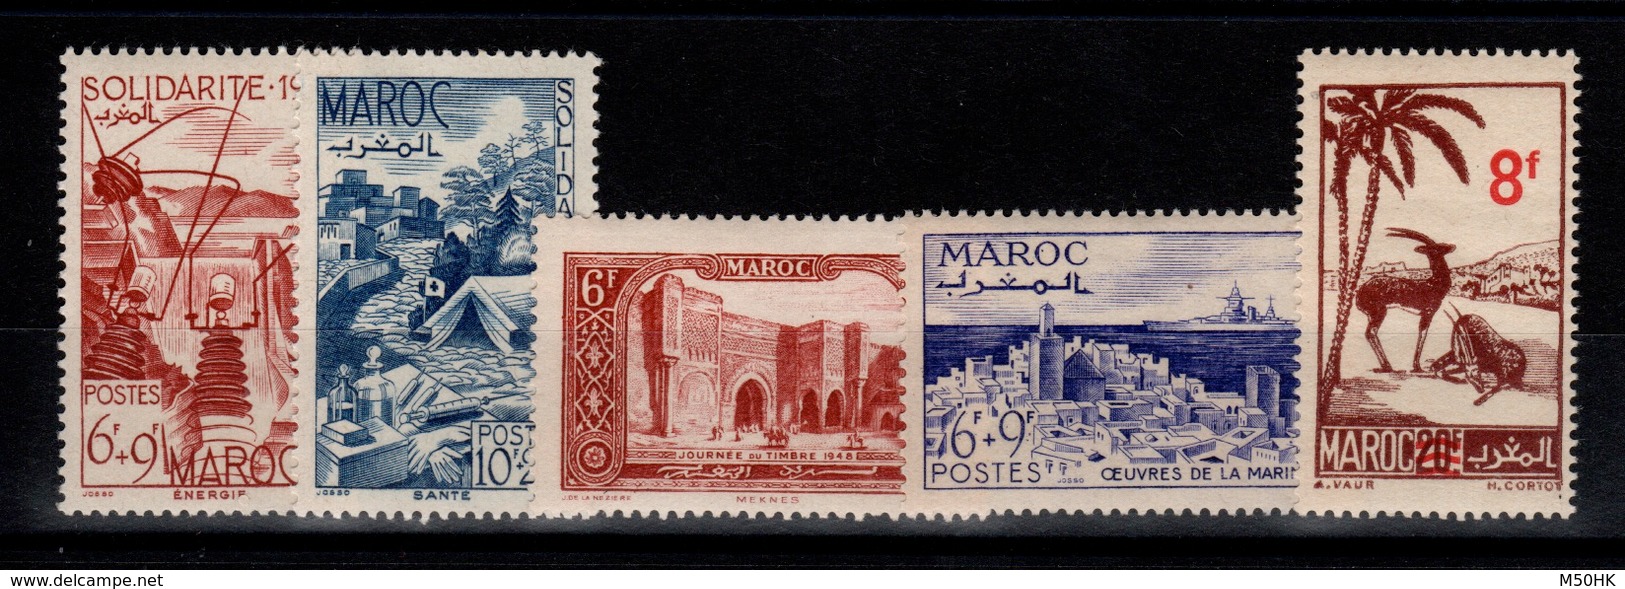 Maroc - Année 1948 Complète N** YV 266 / 267 / 268 / 269 / 270 Cote 8,70+ Euros - Neufs